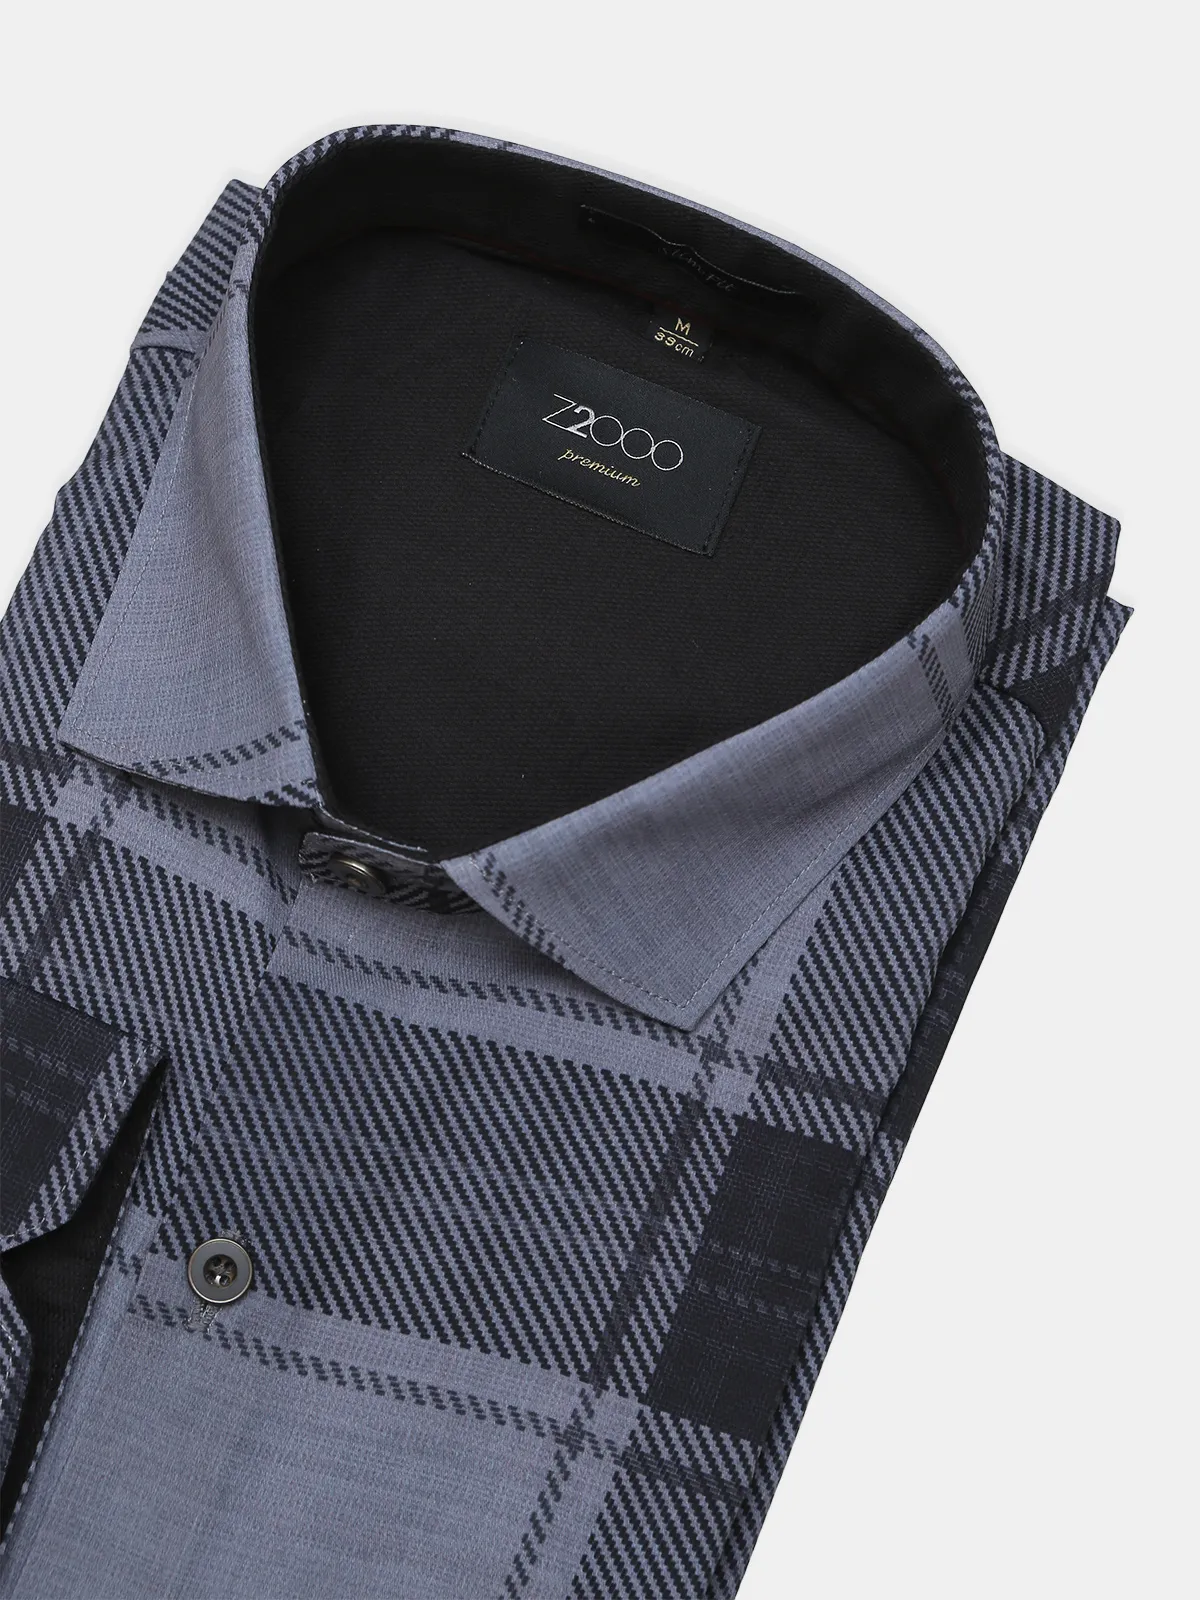 Z2000 checks style grey color formal cotton shirt